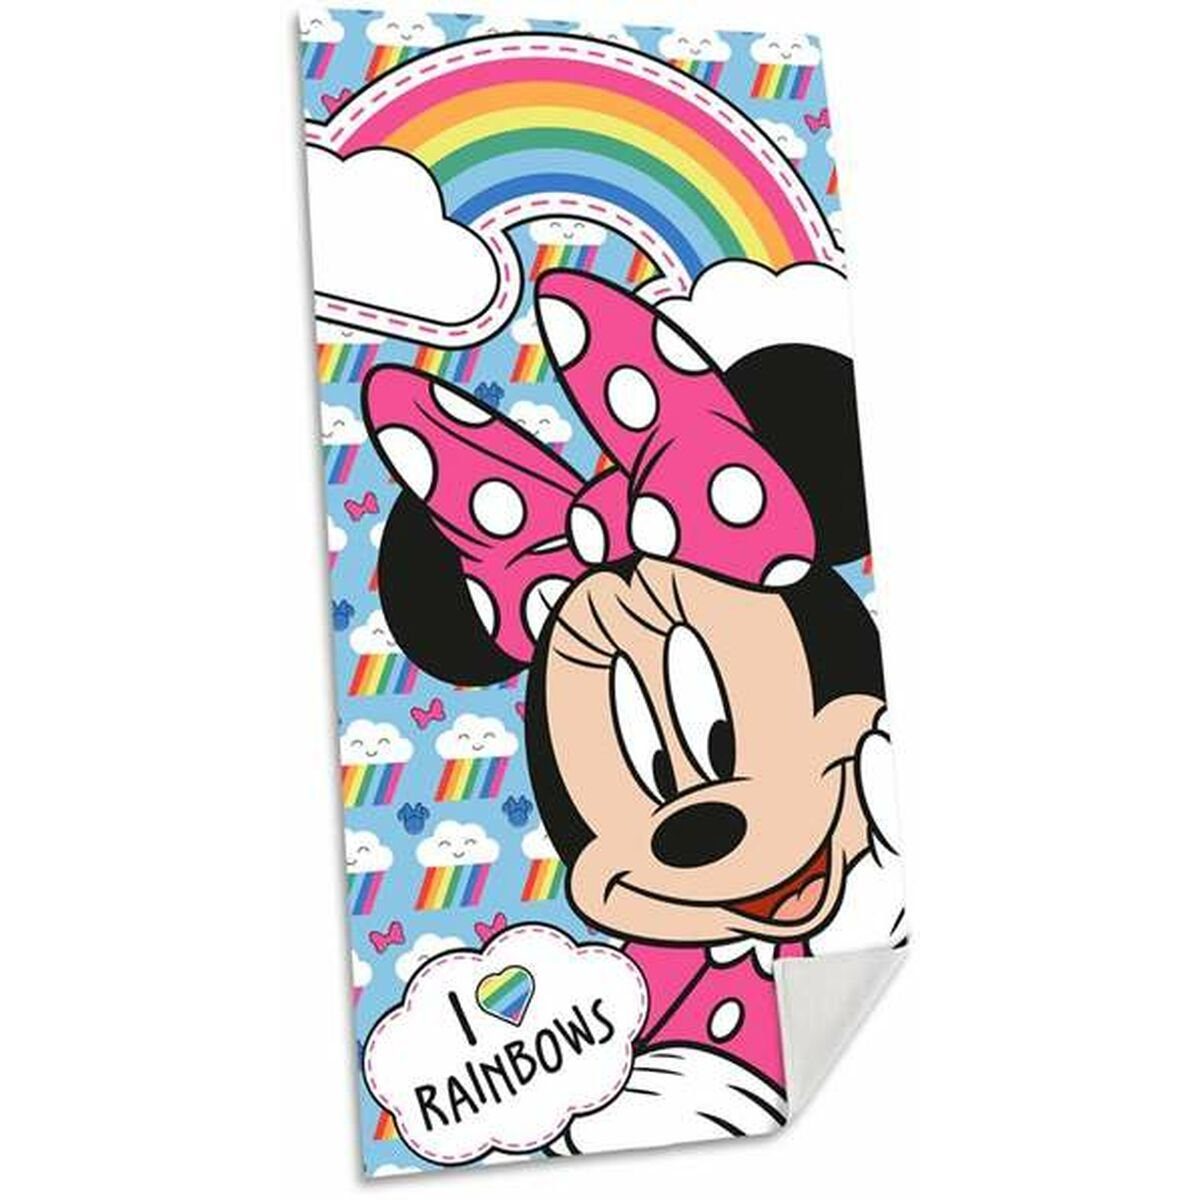 Strandbadetuch Handtuch cm Disney 140 Mouse Minnie 70 x Mouse Minnie